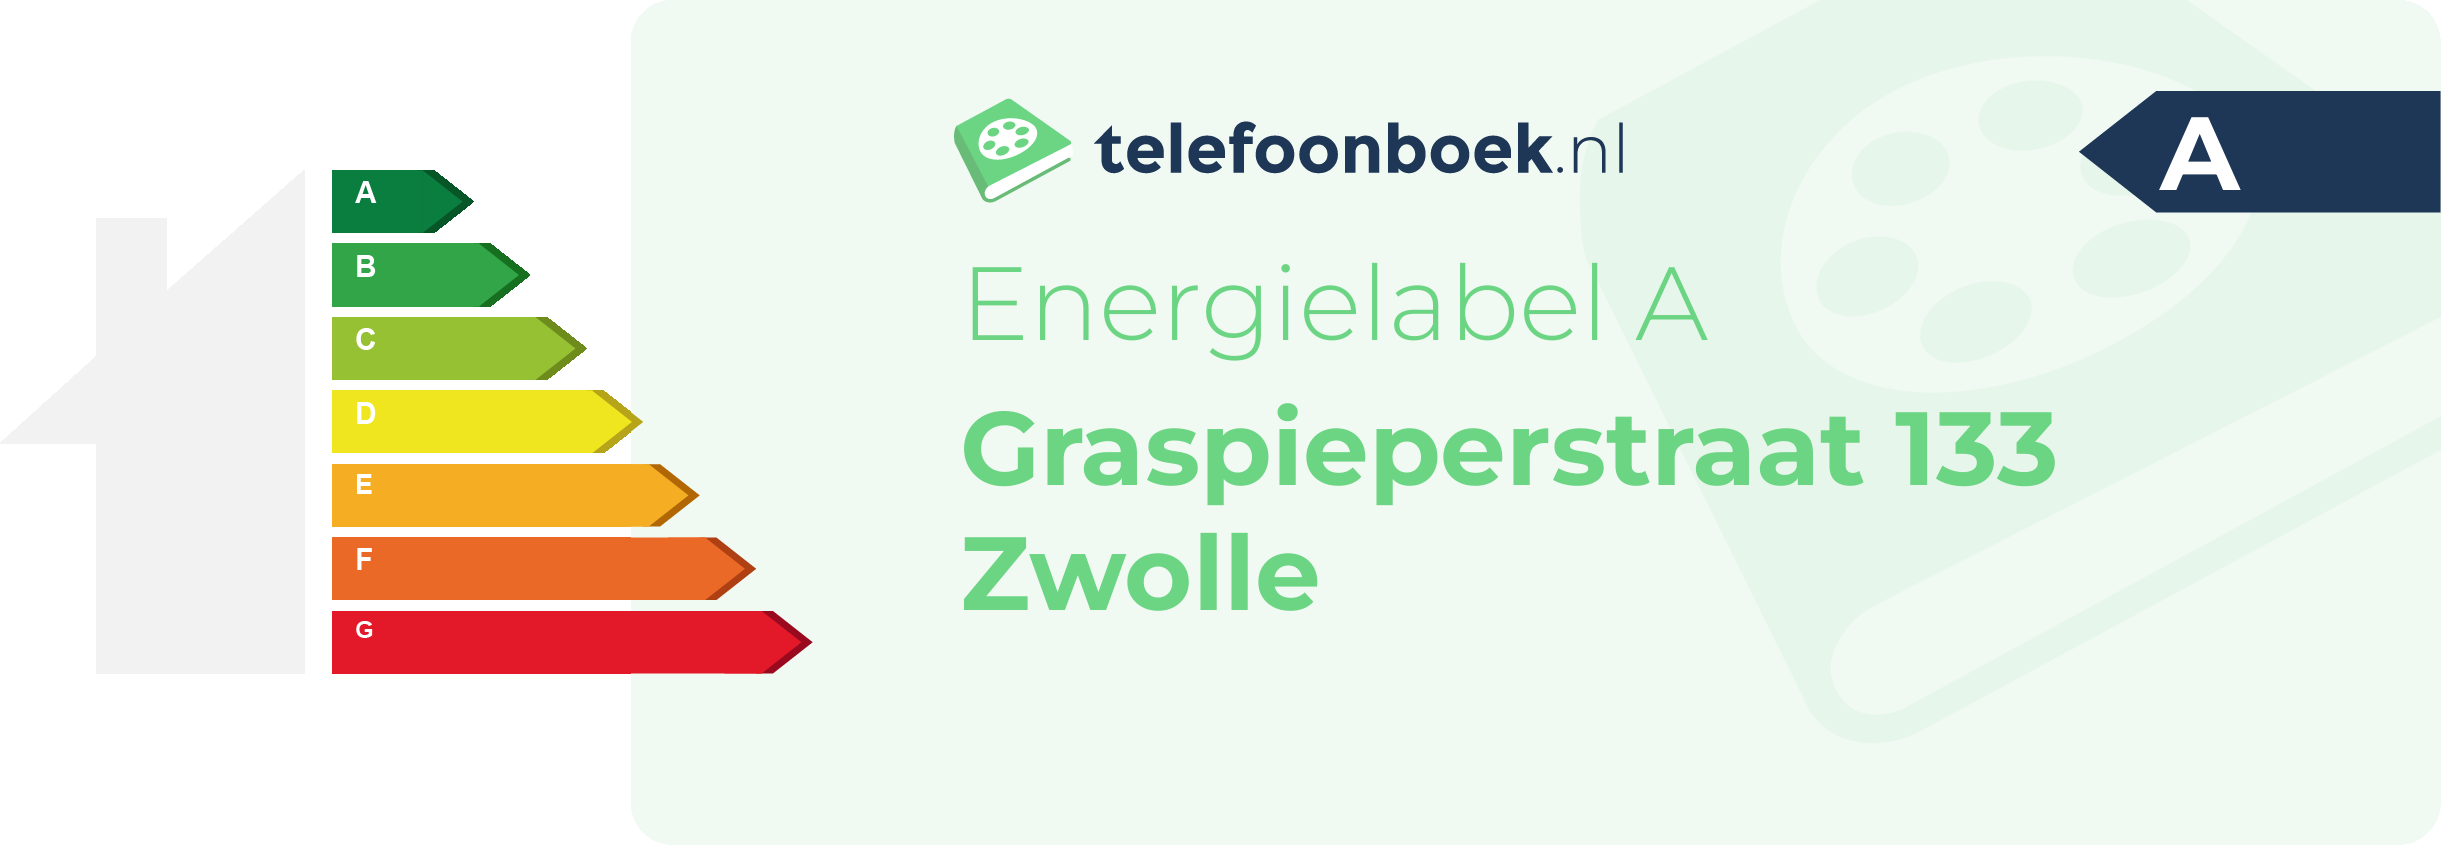 Energielabel Graspieperstraat 133 Zwolle